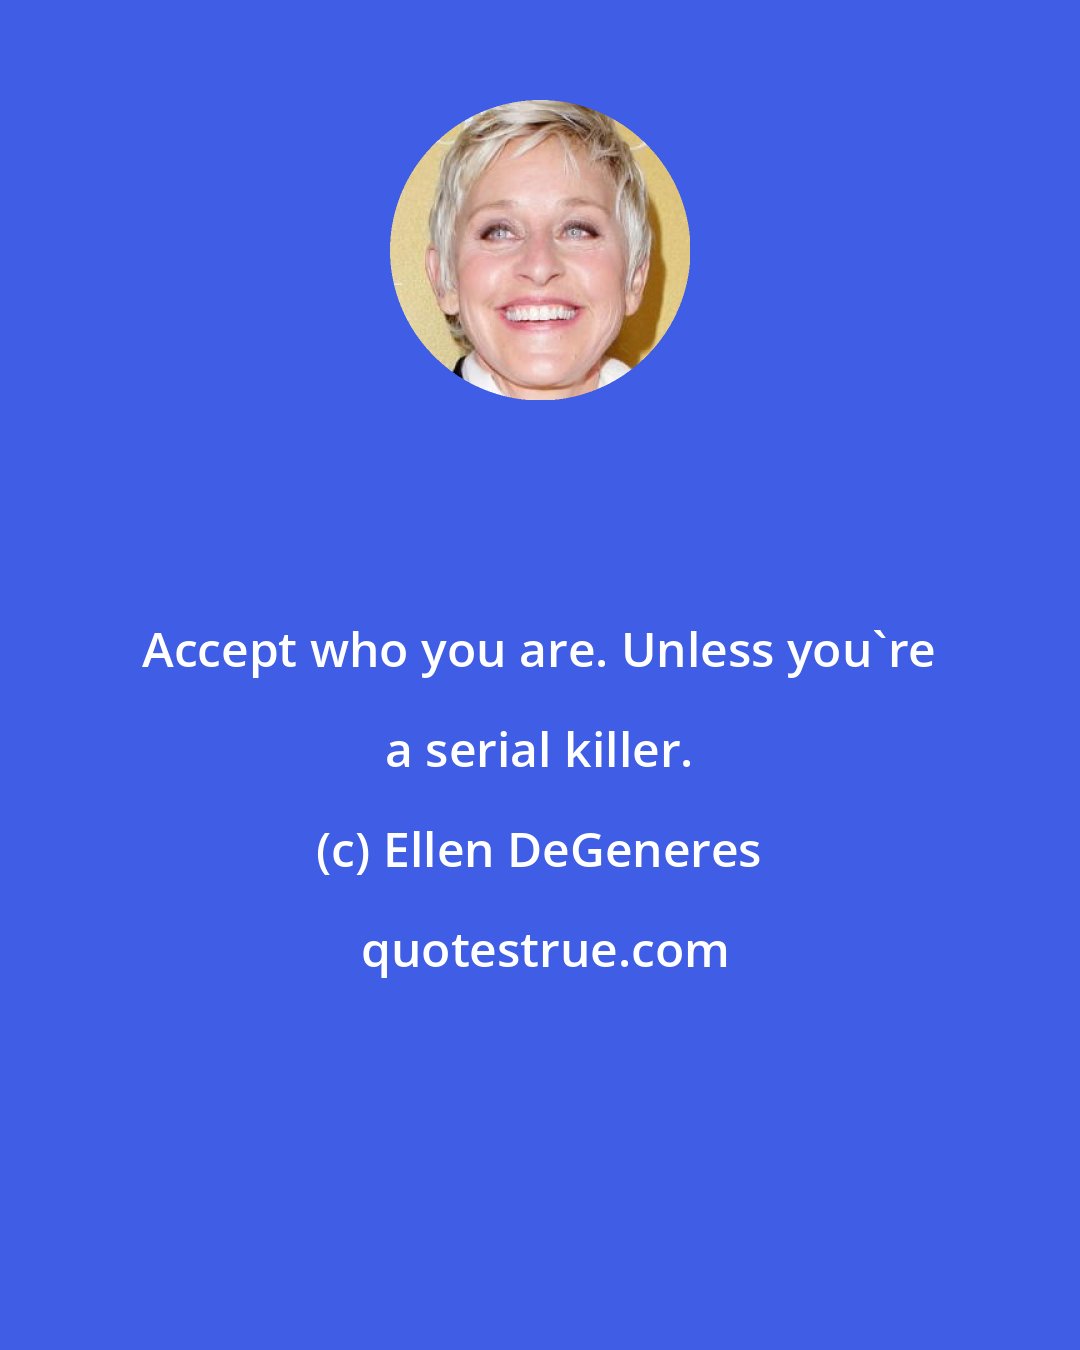 Ellen DeGeneres: Accept who you are. Unless you're a serial killer.